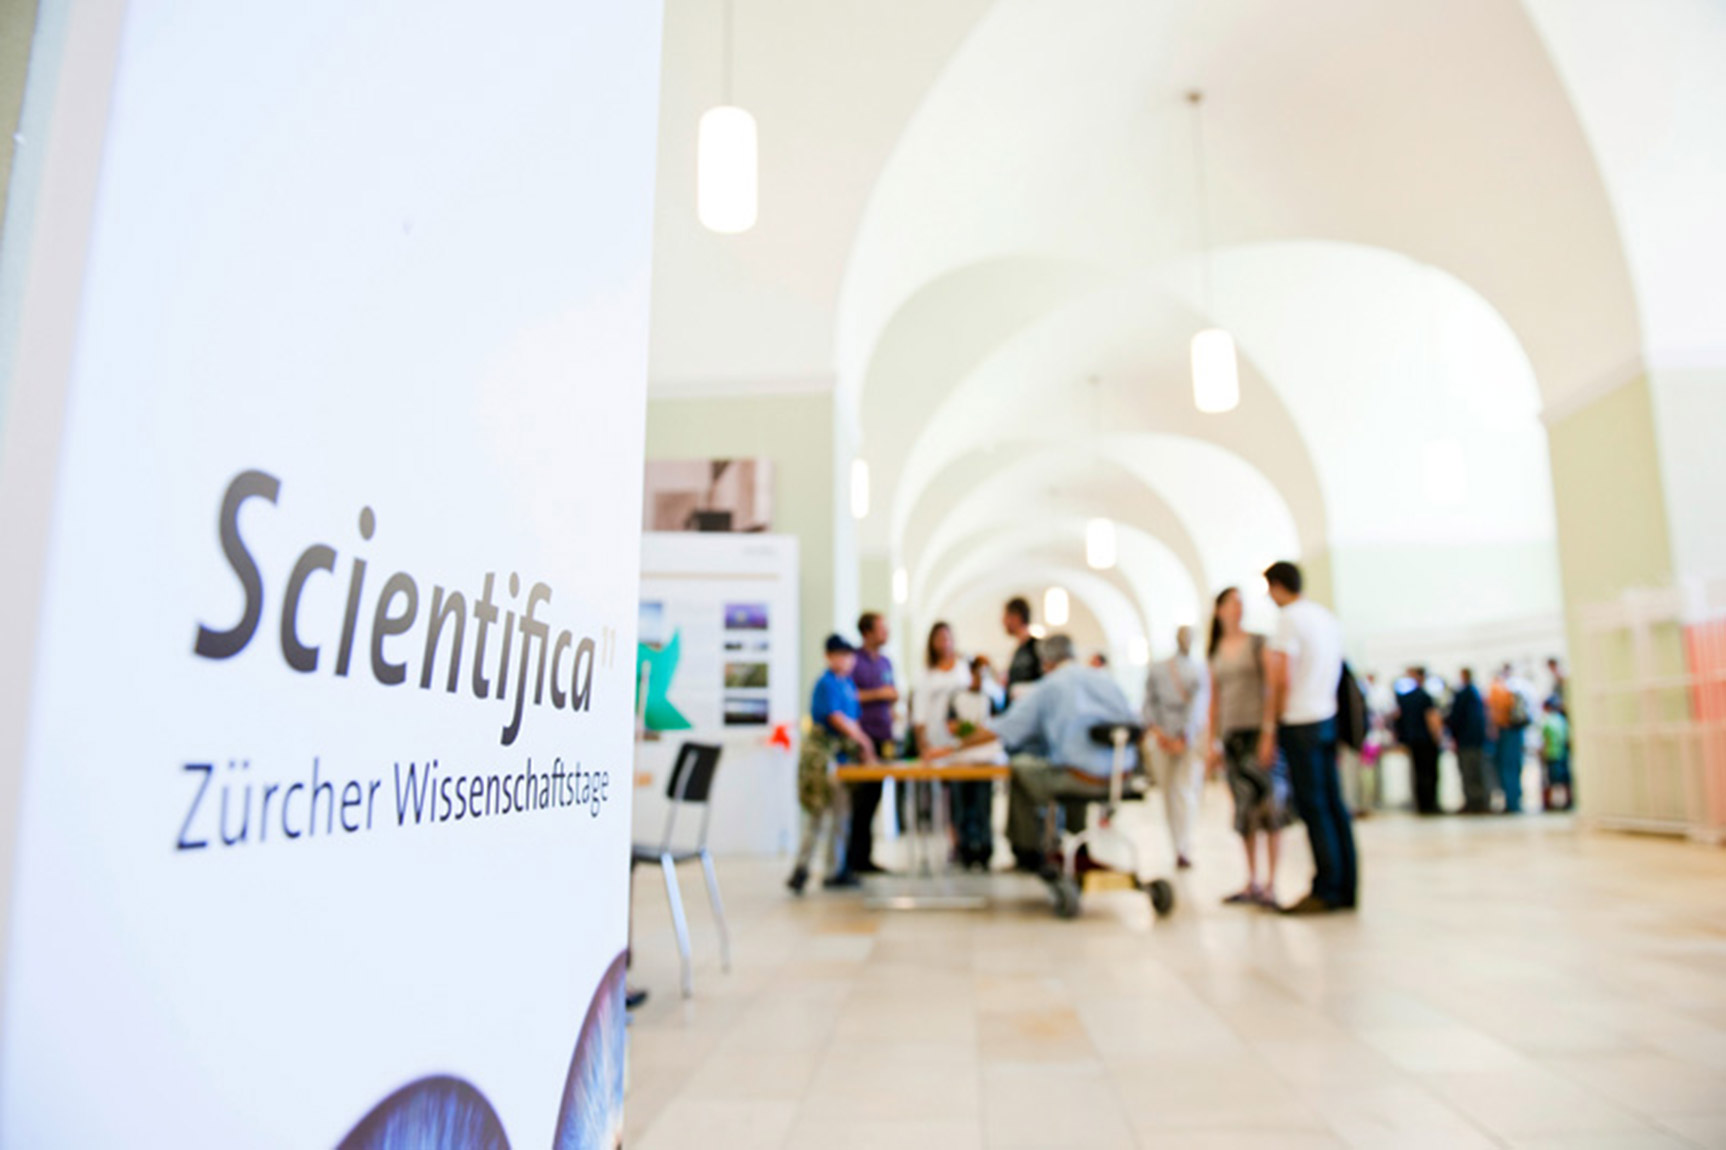 2011 – First Edition of Zurich’s Research Fair Scientifica